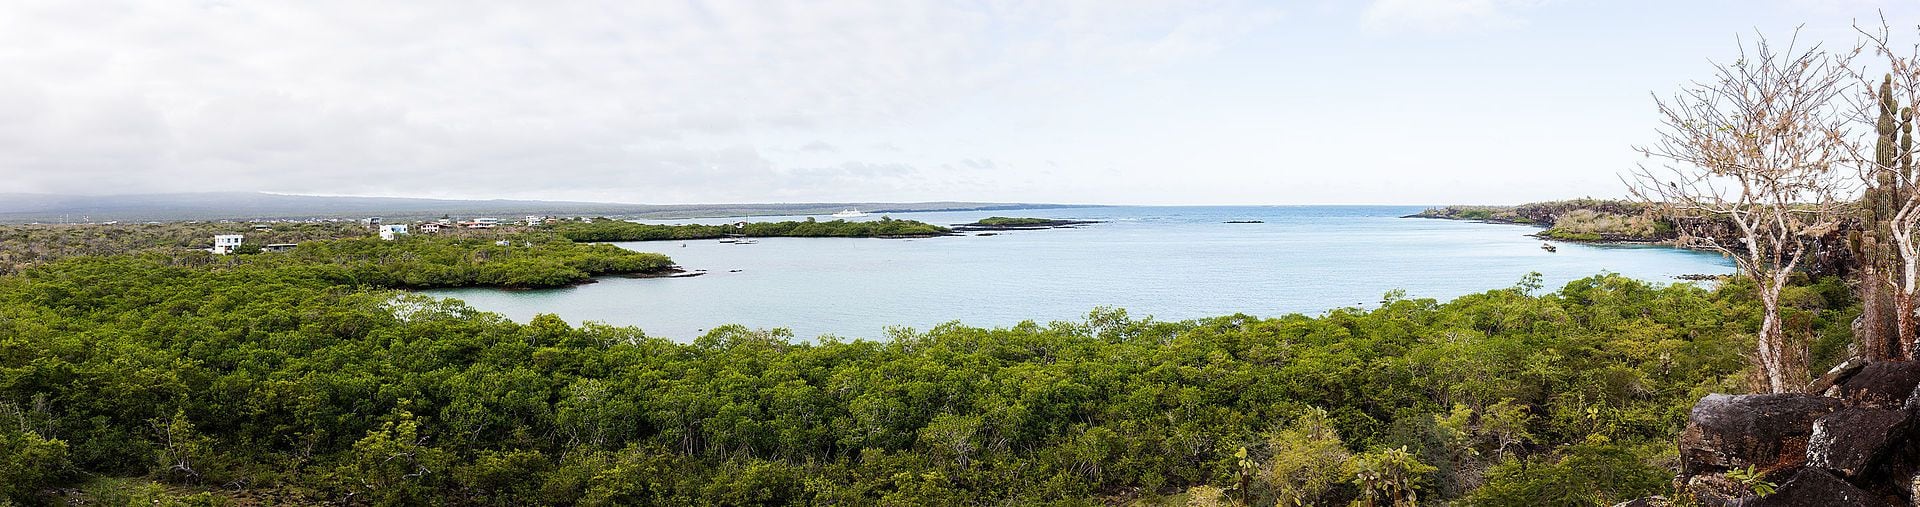 Isla Santa Cruz, Galápagos (Foto: Diego Delso)